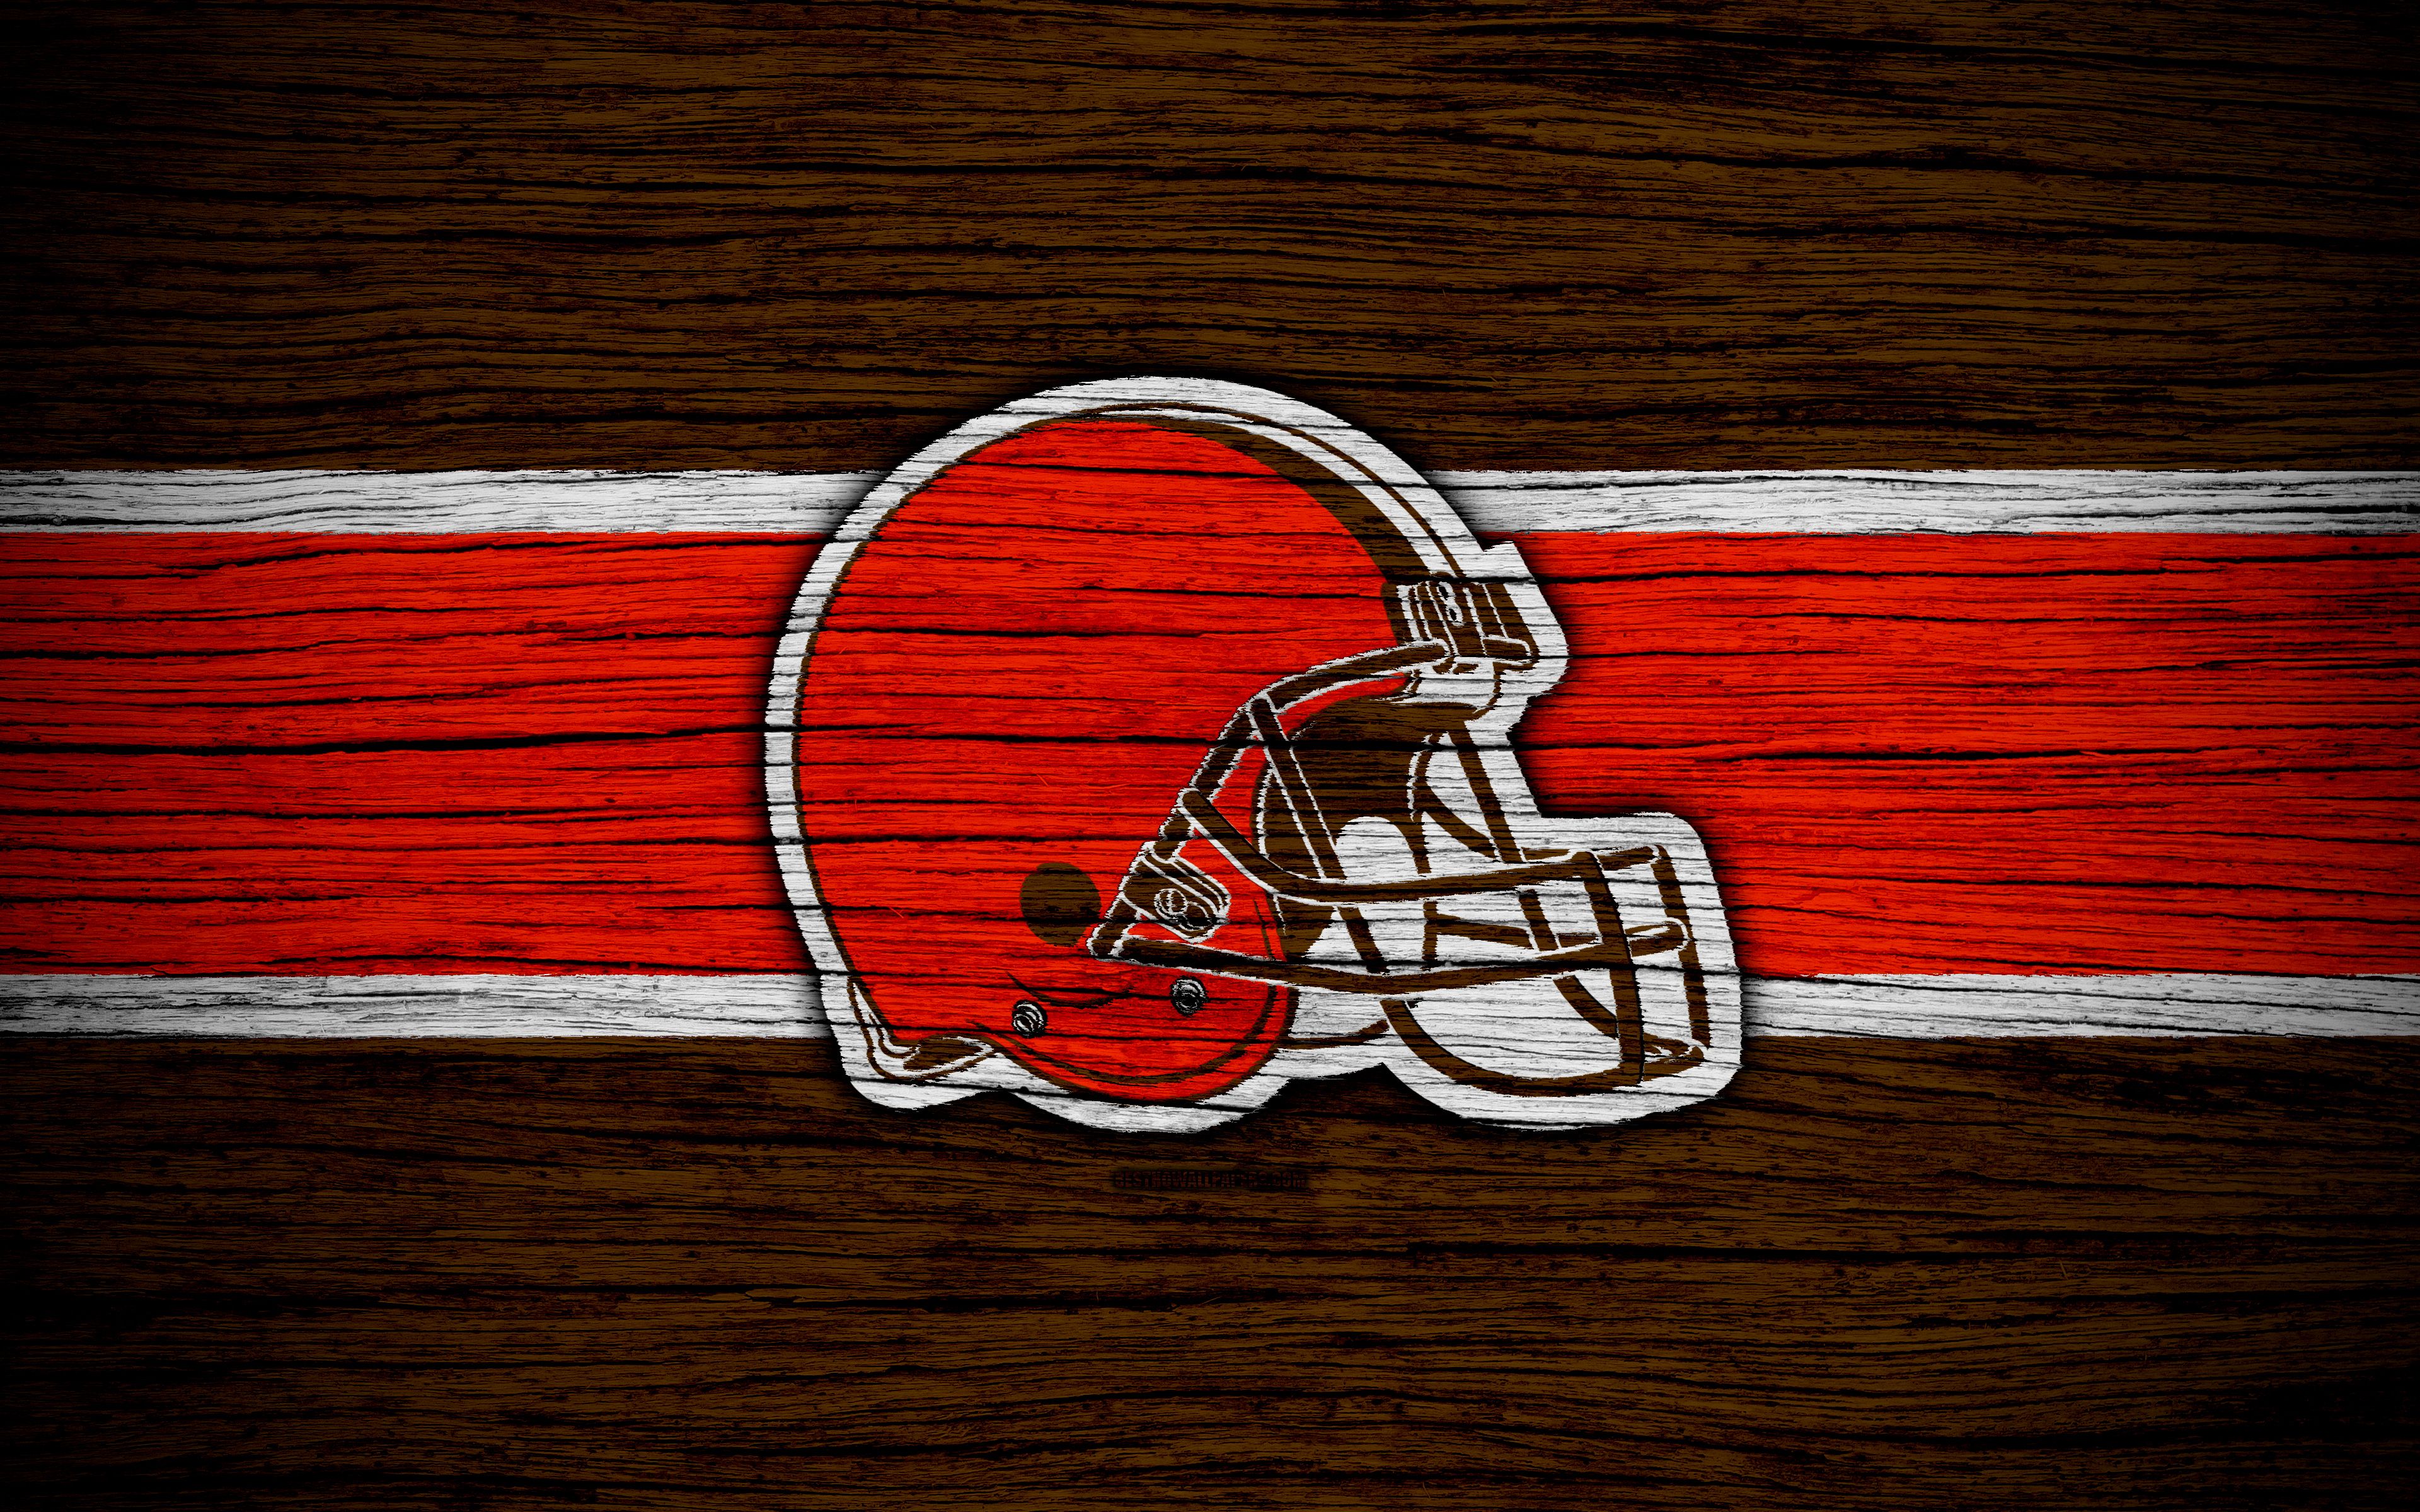 Download wallpaper Cleveland Browns, NFL, 4k, wooden texture